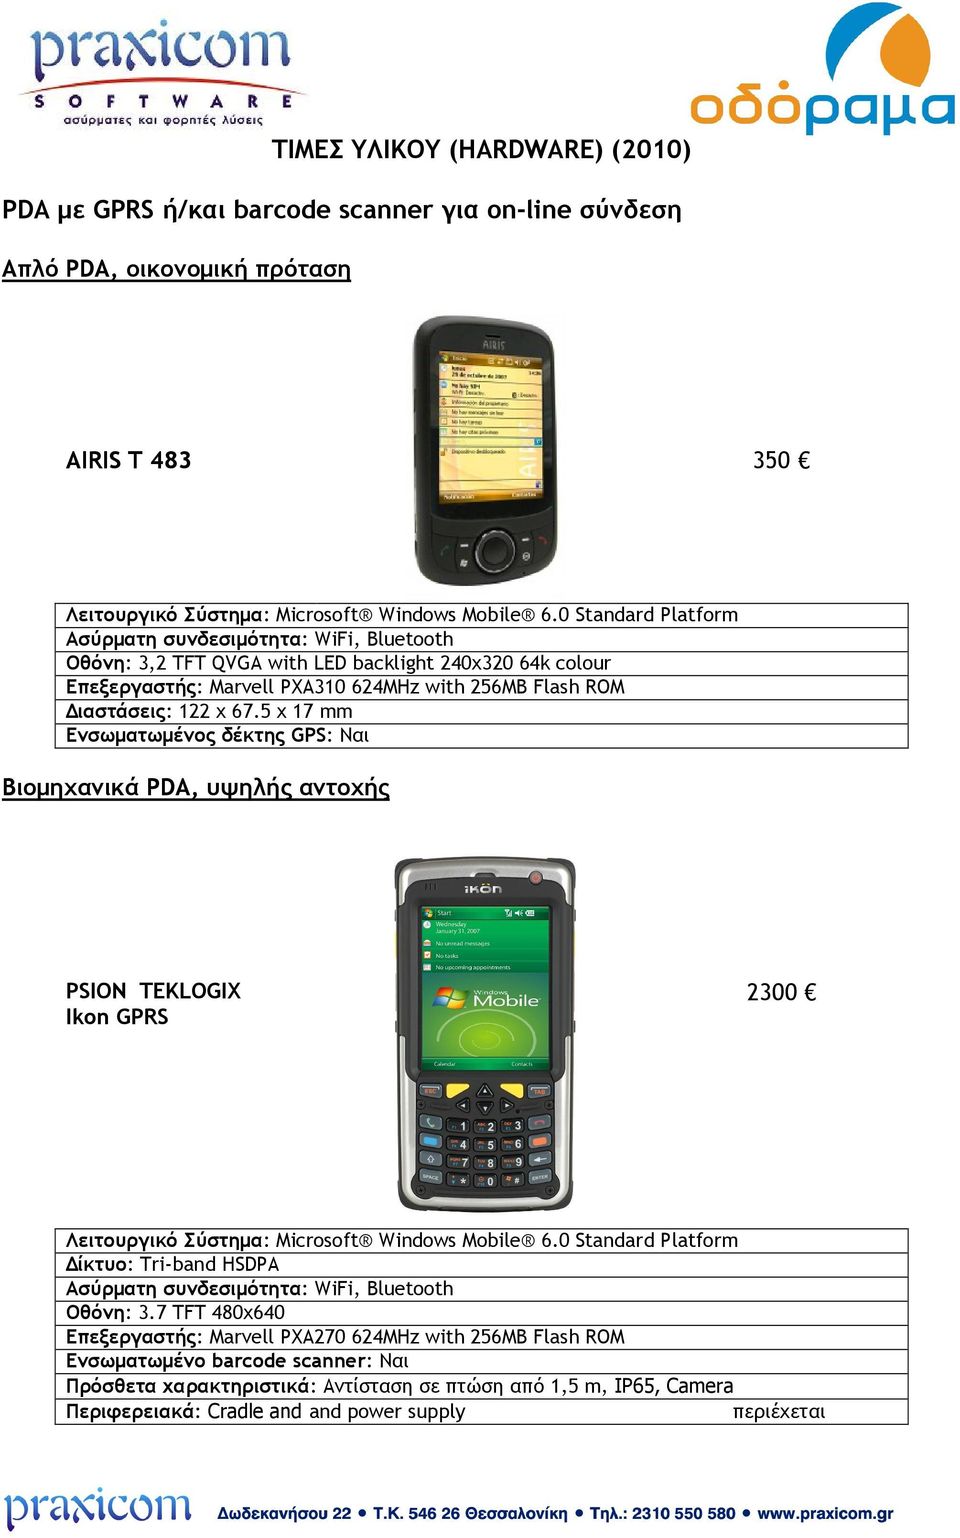 5 x 17 mm Ενσωματωμένος δέκτης GPS: Ναι Βιομηχανικά PDA, υψηλής αντοχής PSION TEKLOGIX Ikon GPRS 2300 Δίκτυο: Tri-band HSDPA Οθόνη: 3.